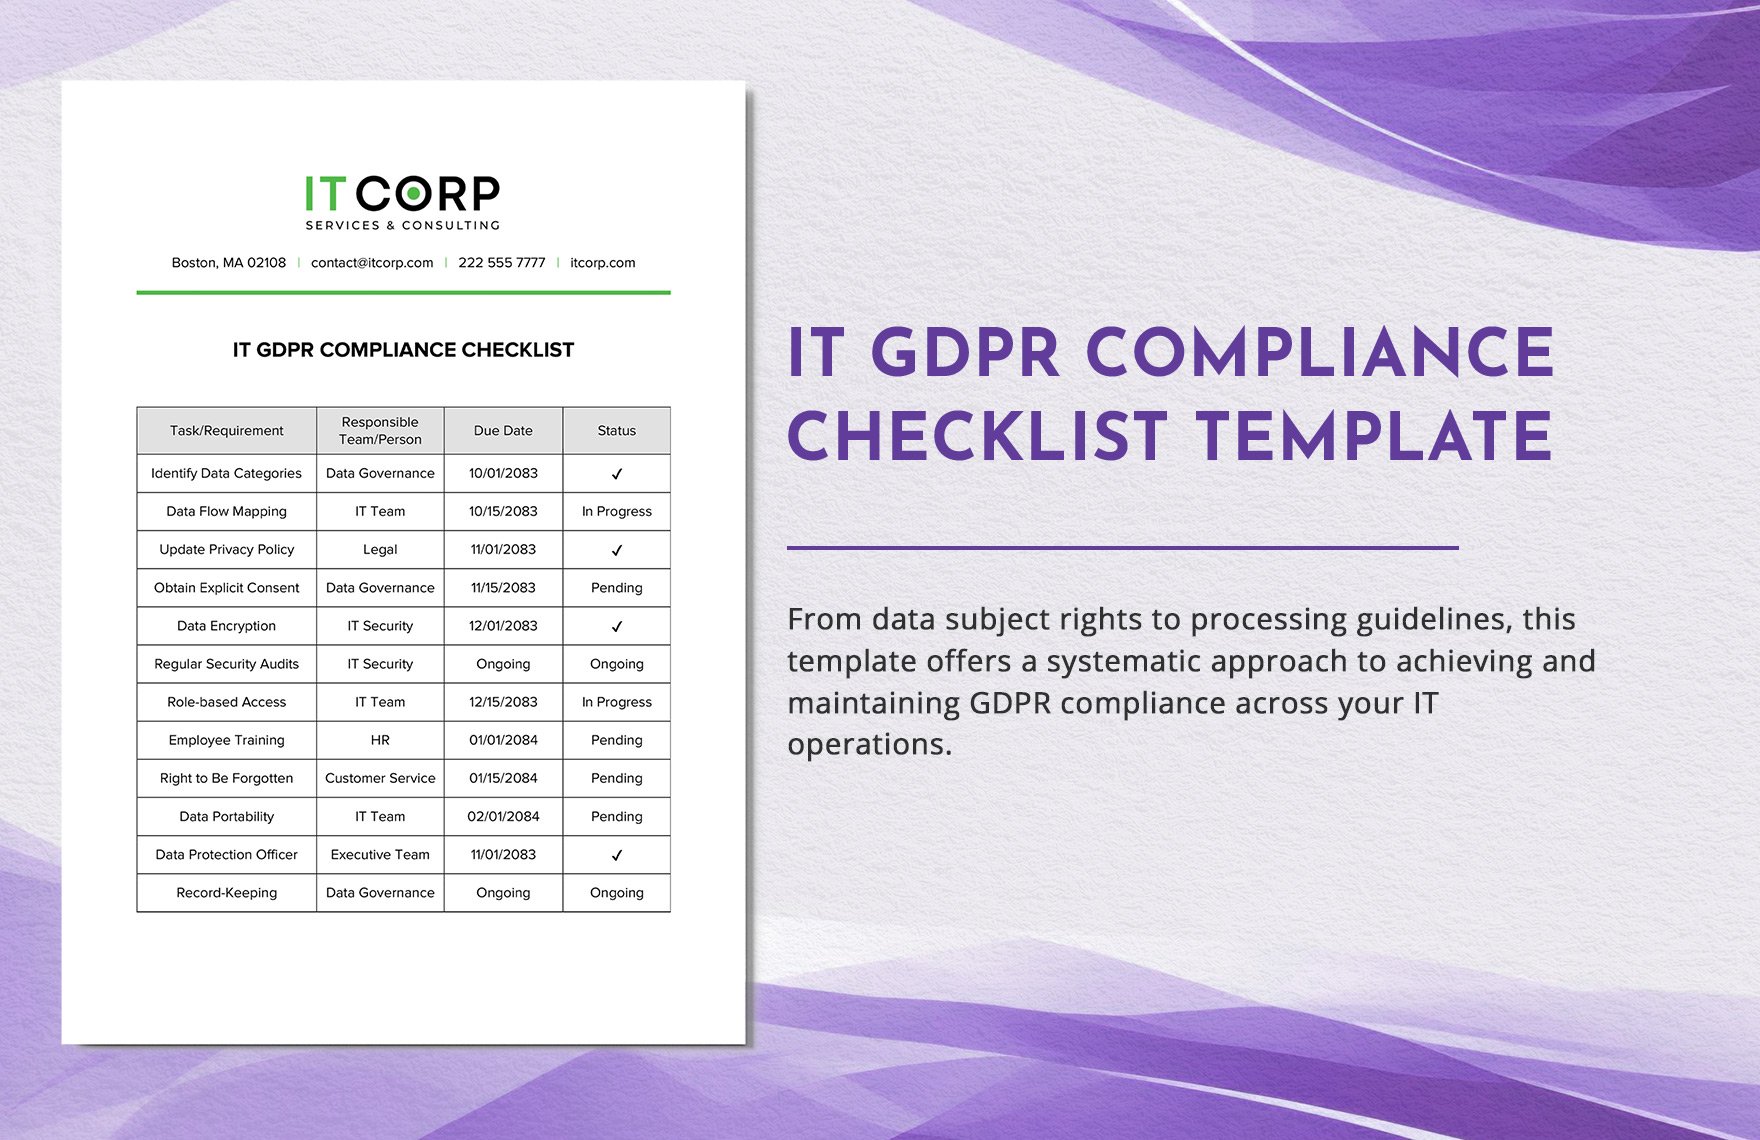 IT GDPR Compliance Checklist Template